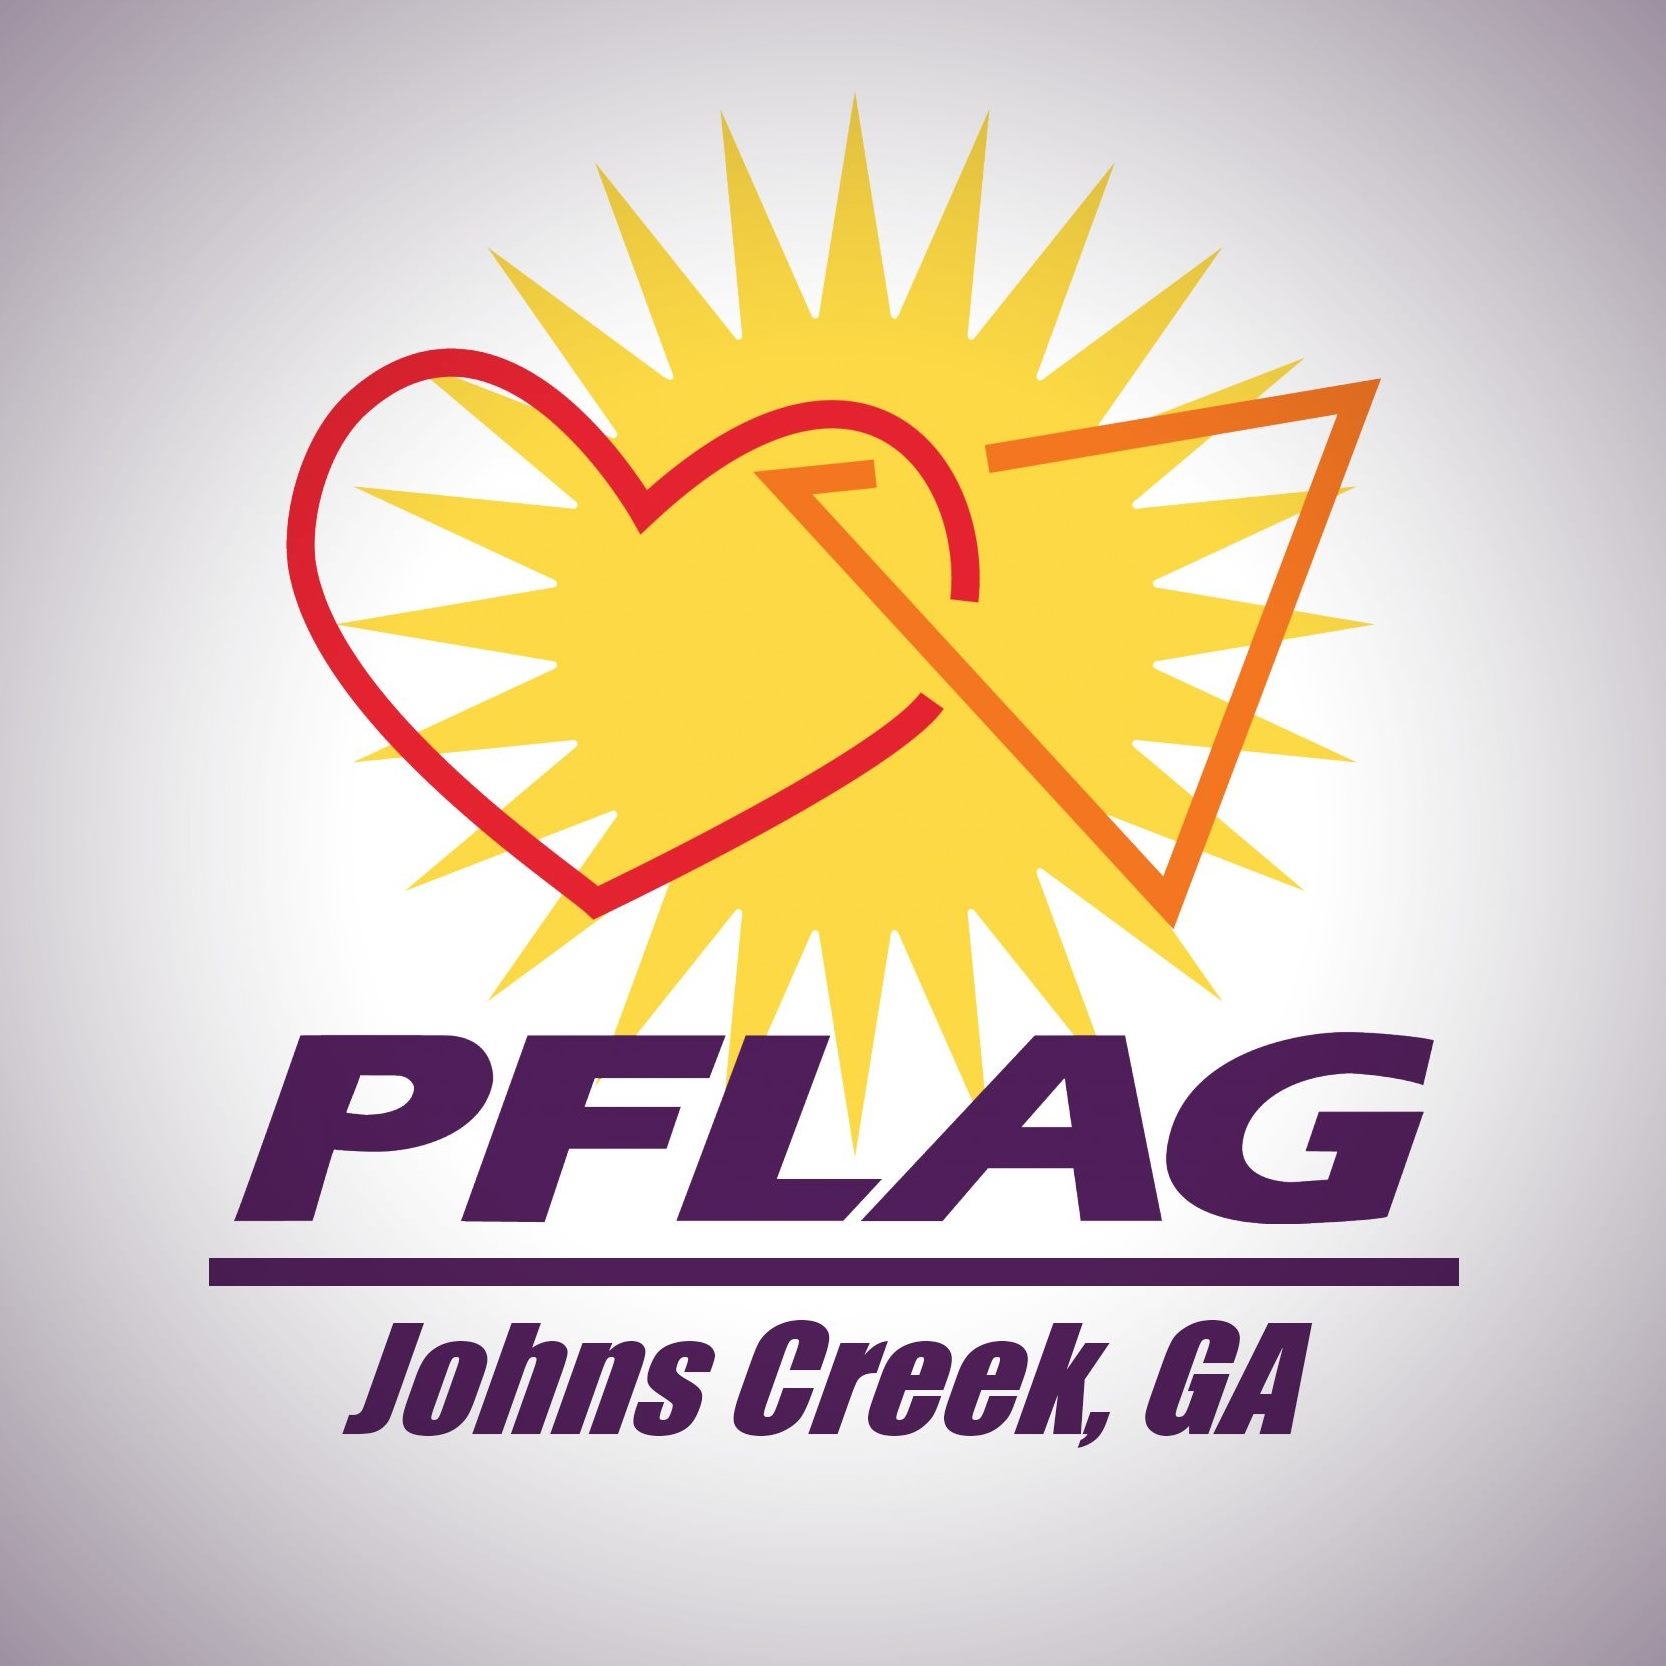 LGBTQ Organizations in Atlanta Georgia - PFLAG Johns Creek